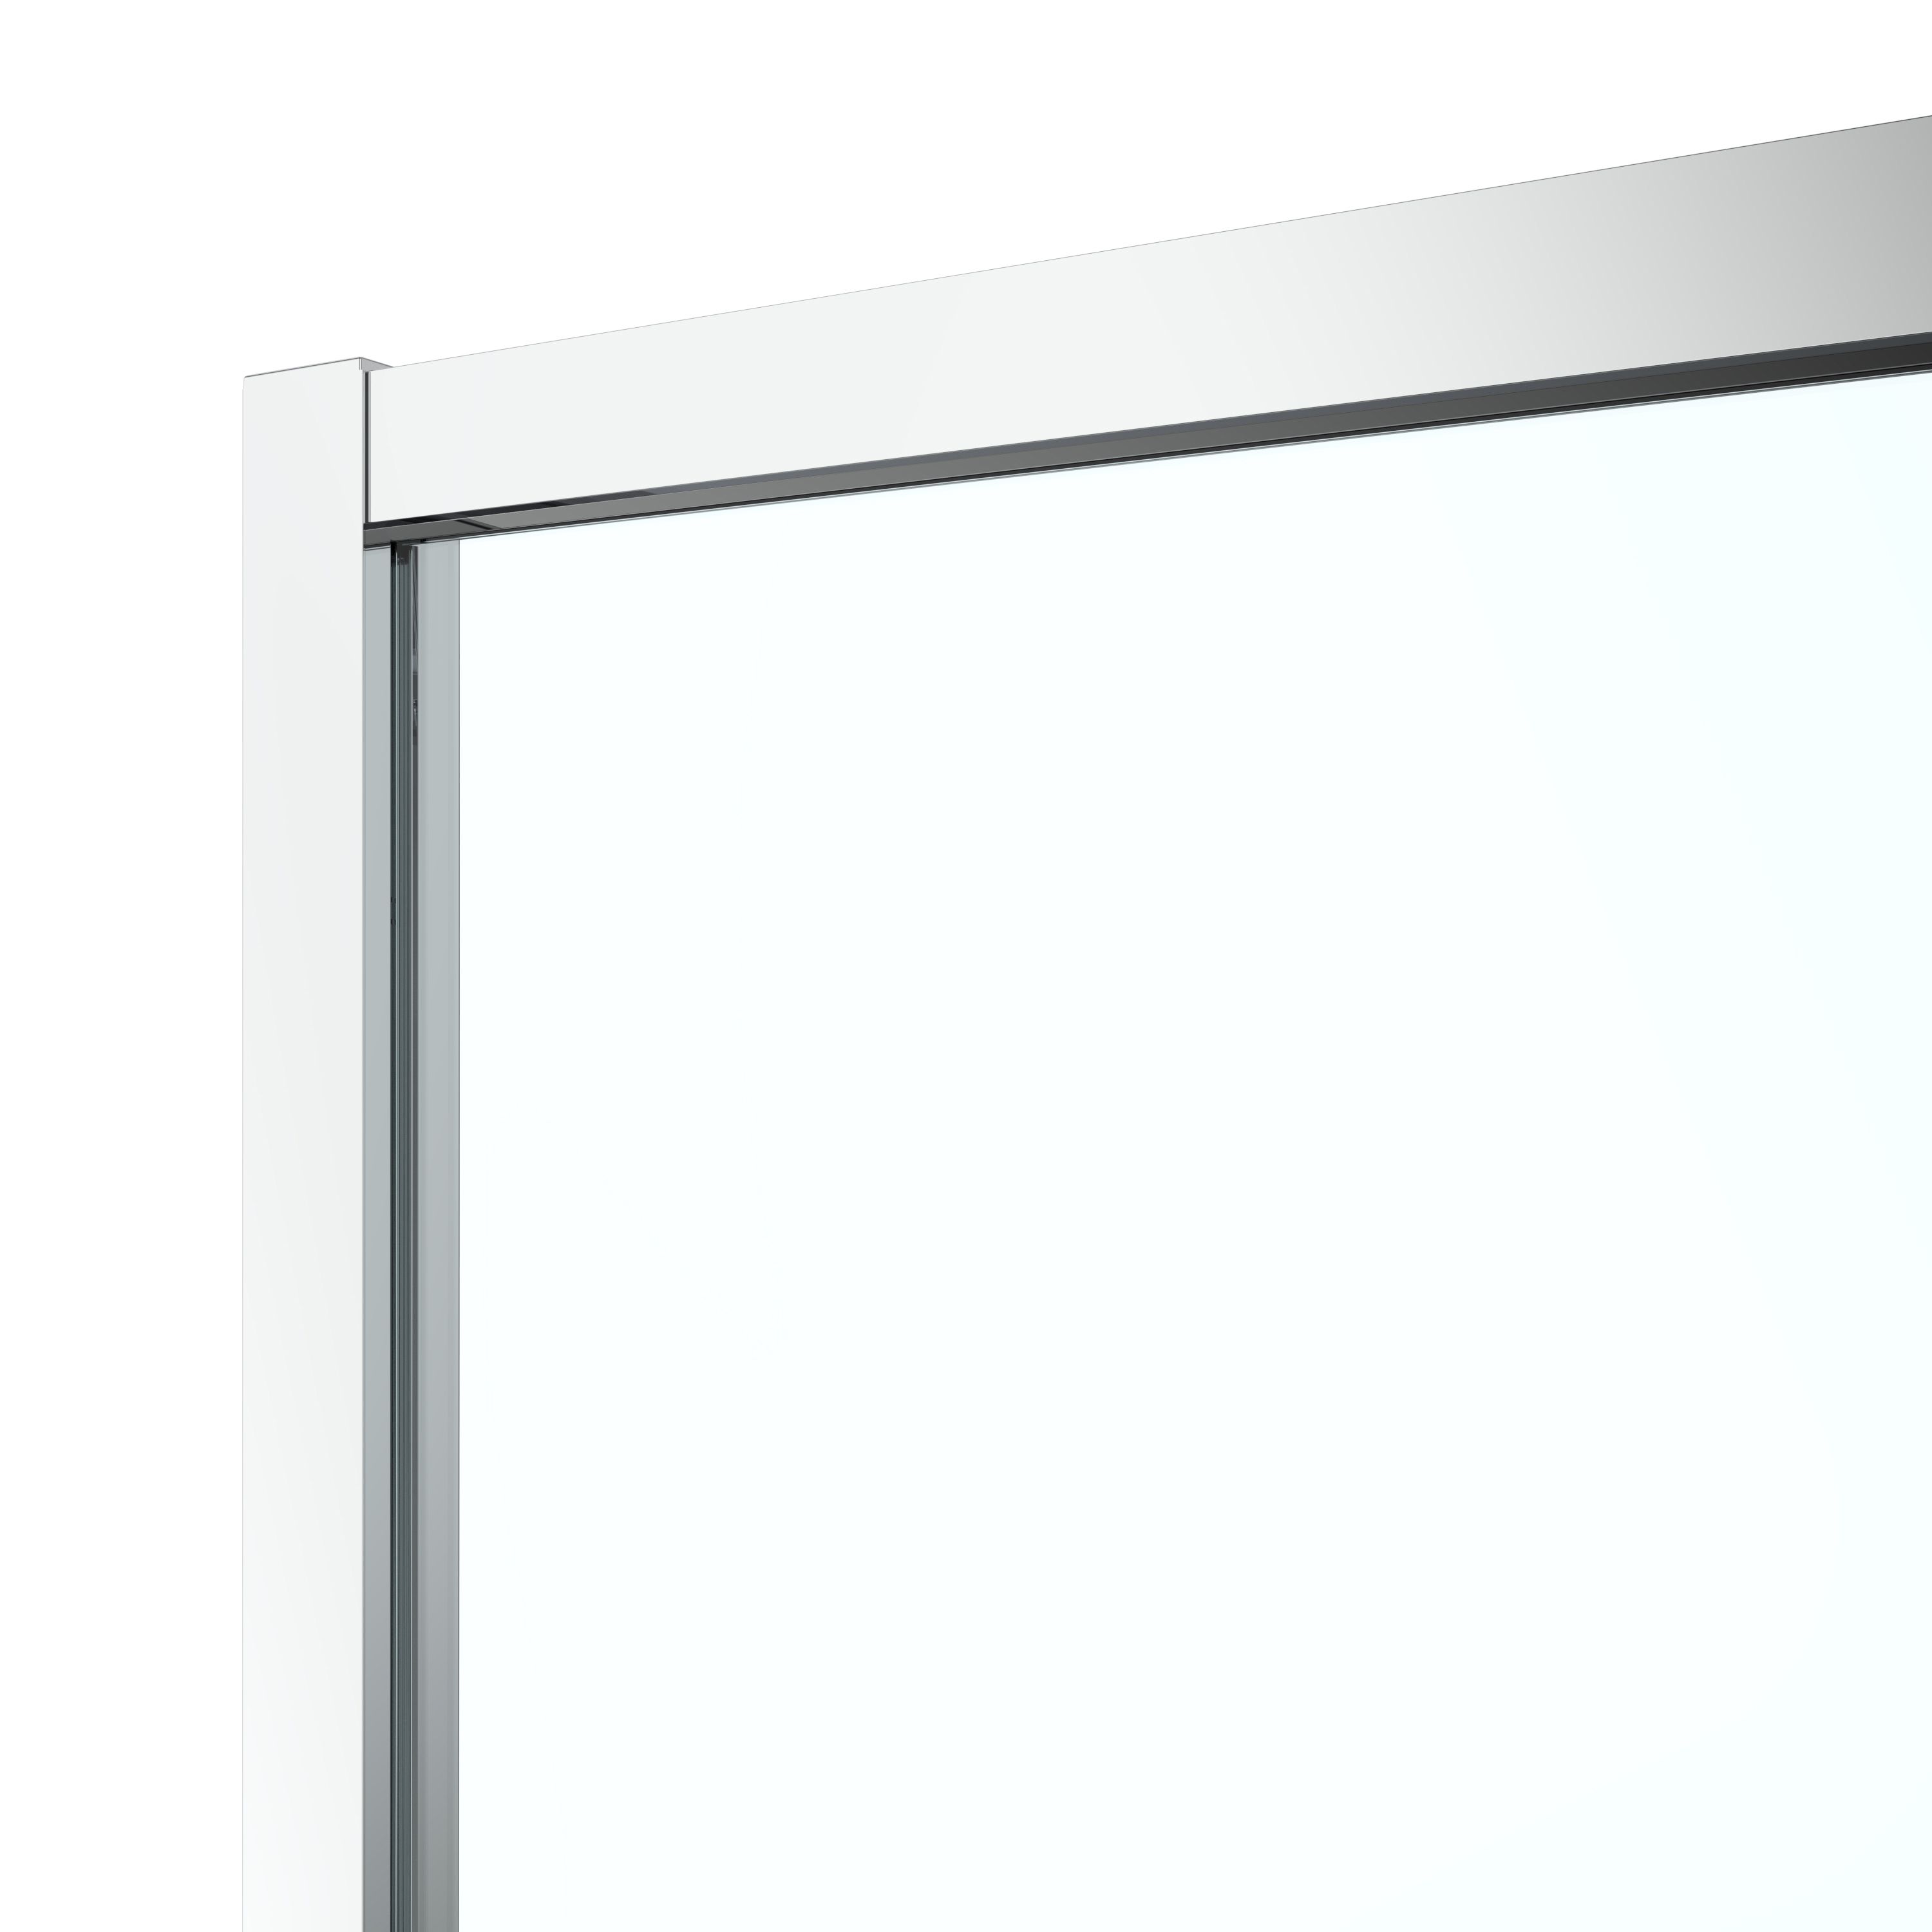 GoodHome Ledava Minimal frame Chrome effect Clear glass Sliding Shower Door (H)195cm (W)160cm